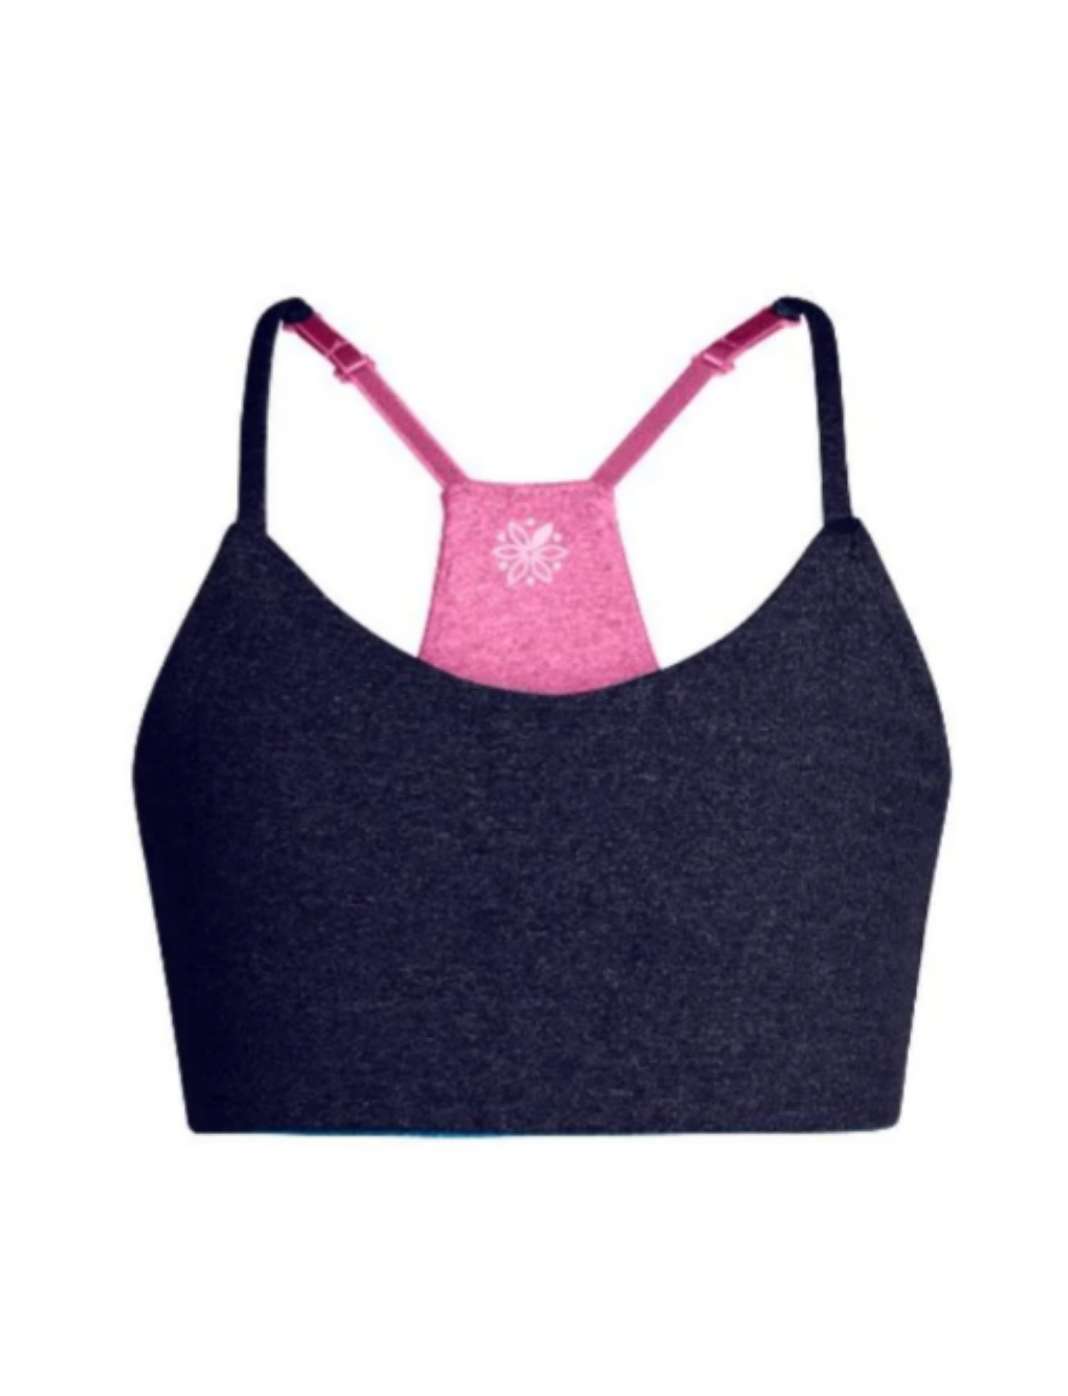 Victoria's Secret Pink Victoria Secret sports bra Size Large - $14